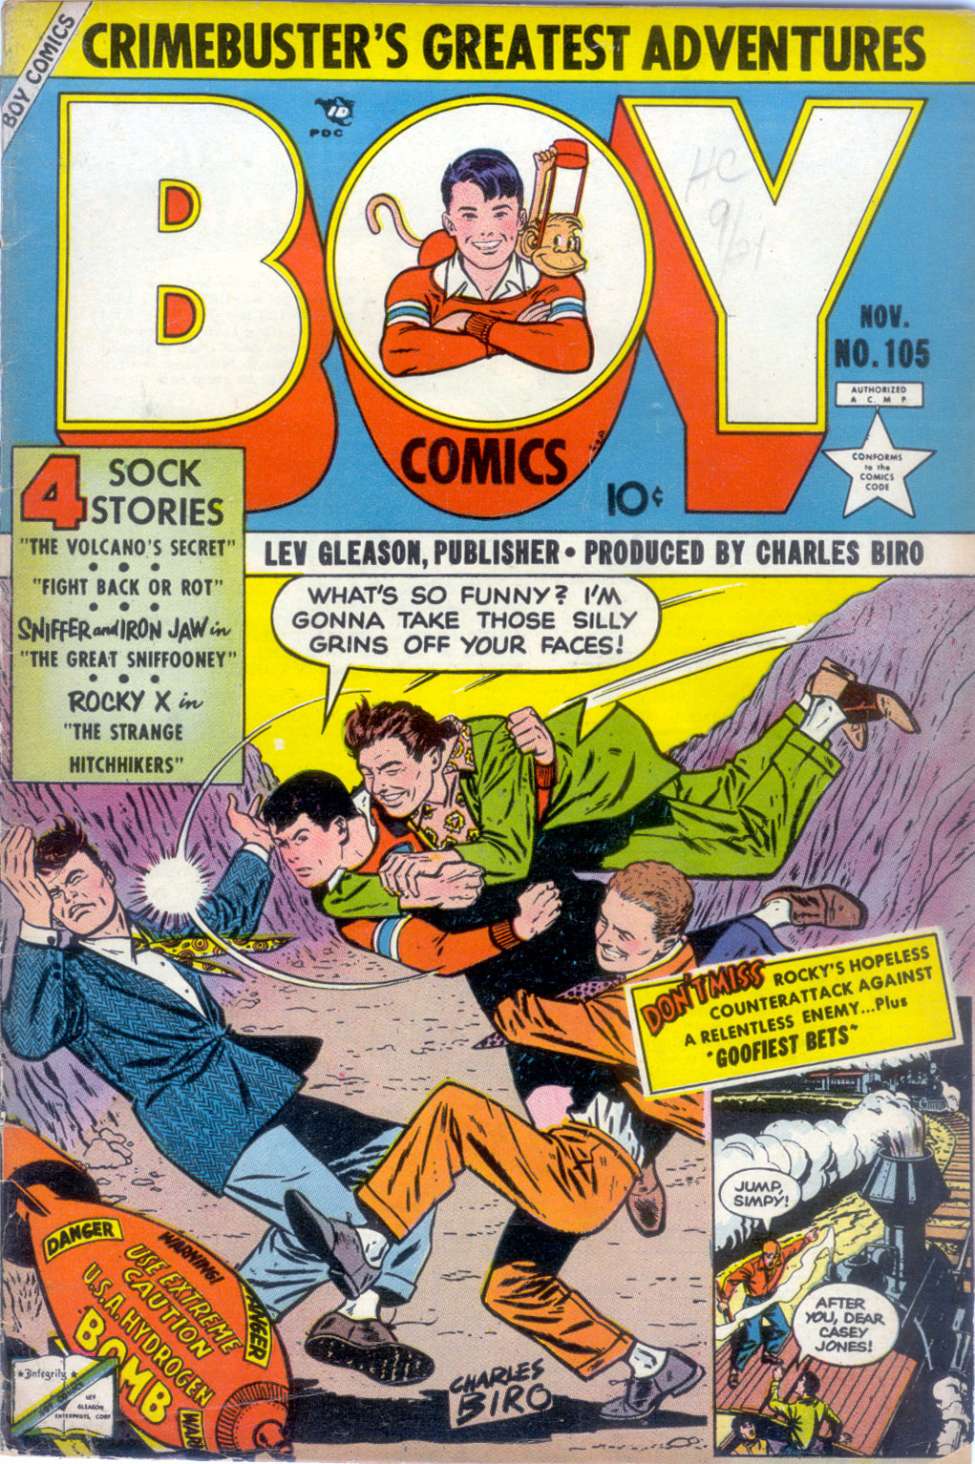 Comic Book Cover For Boy Comics 105